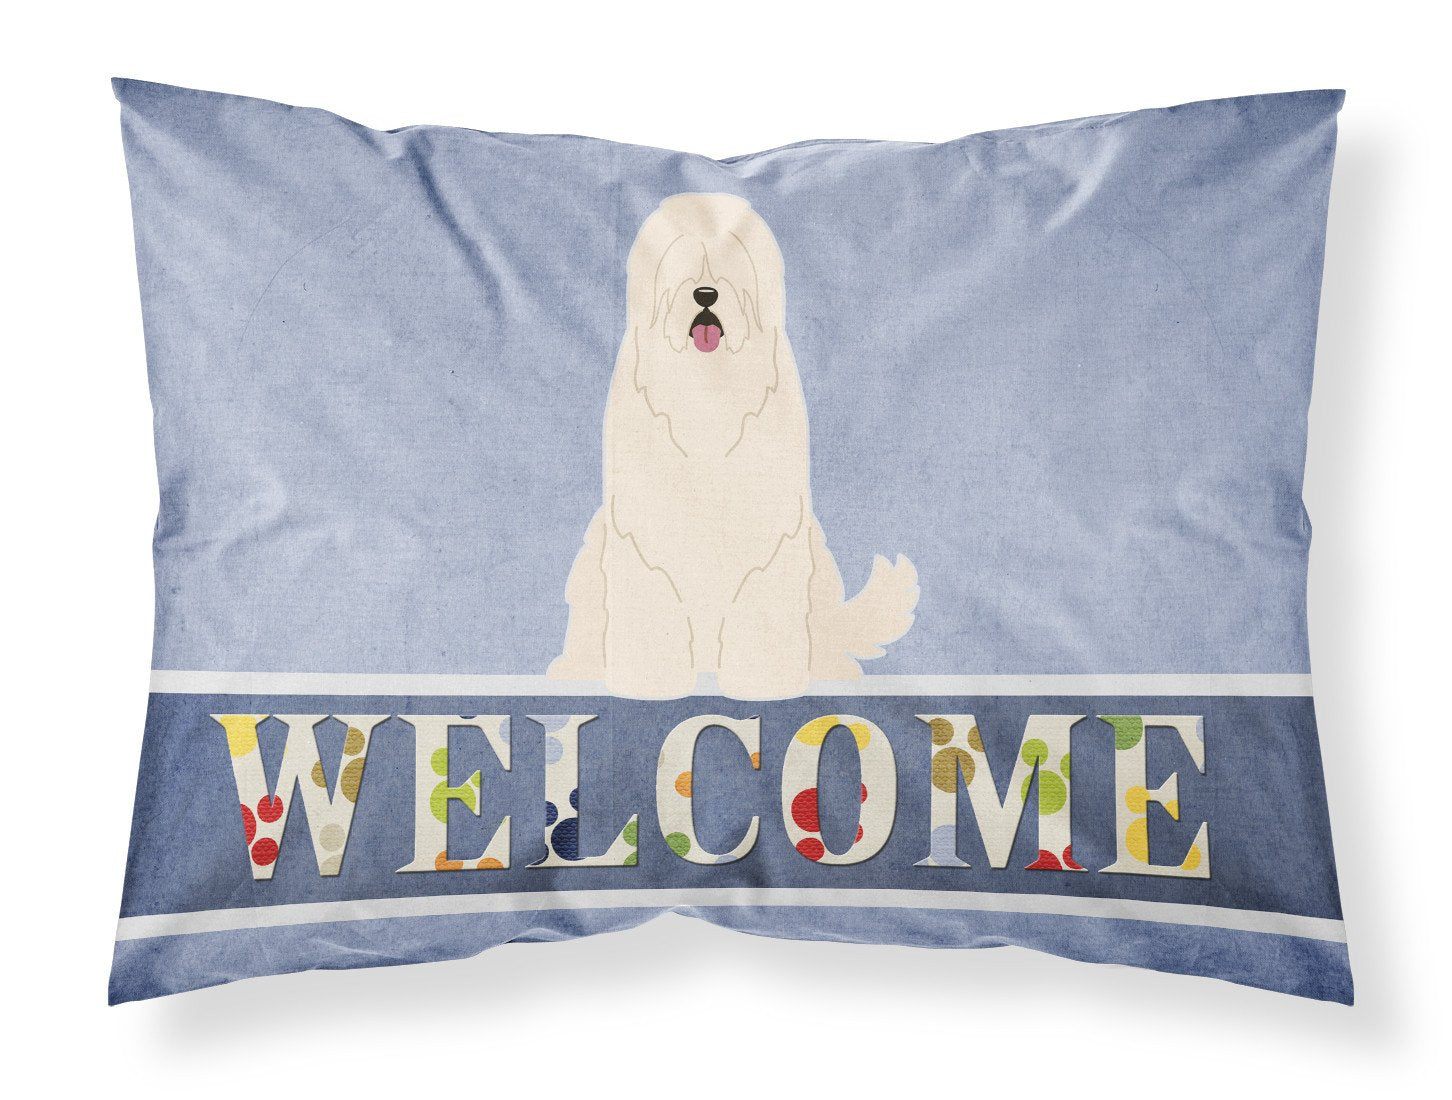 South Russian Sheepdog Welcome Fabric Standard Pillowcase BB5605PILLOWCASE by Caroline's Treasures